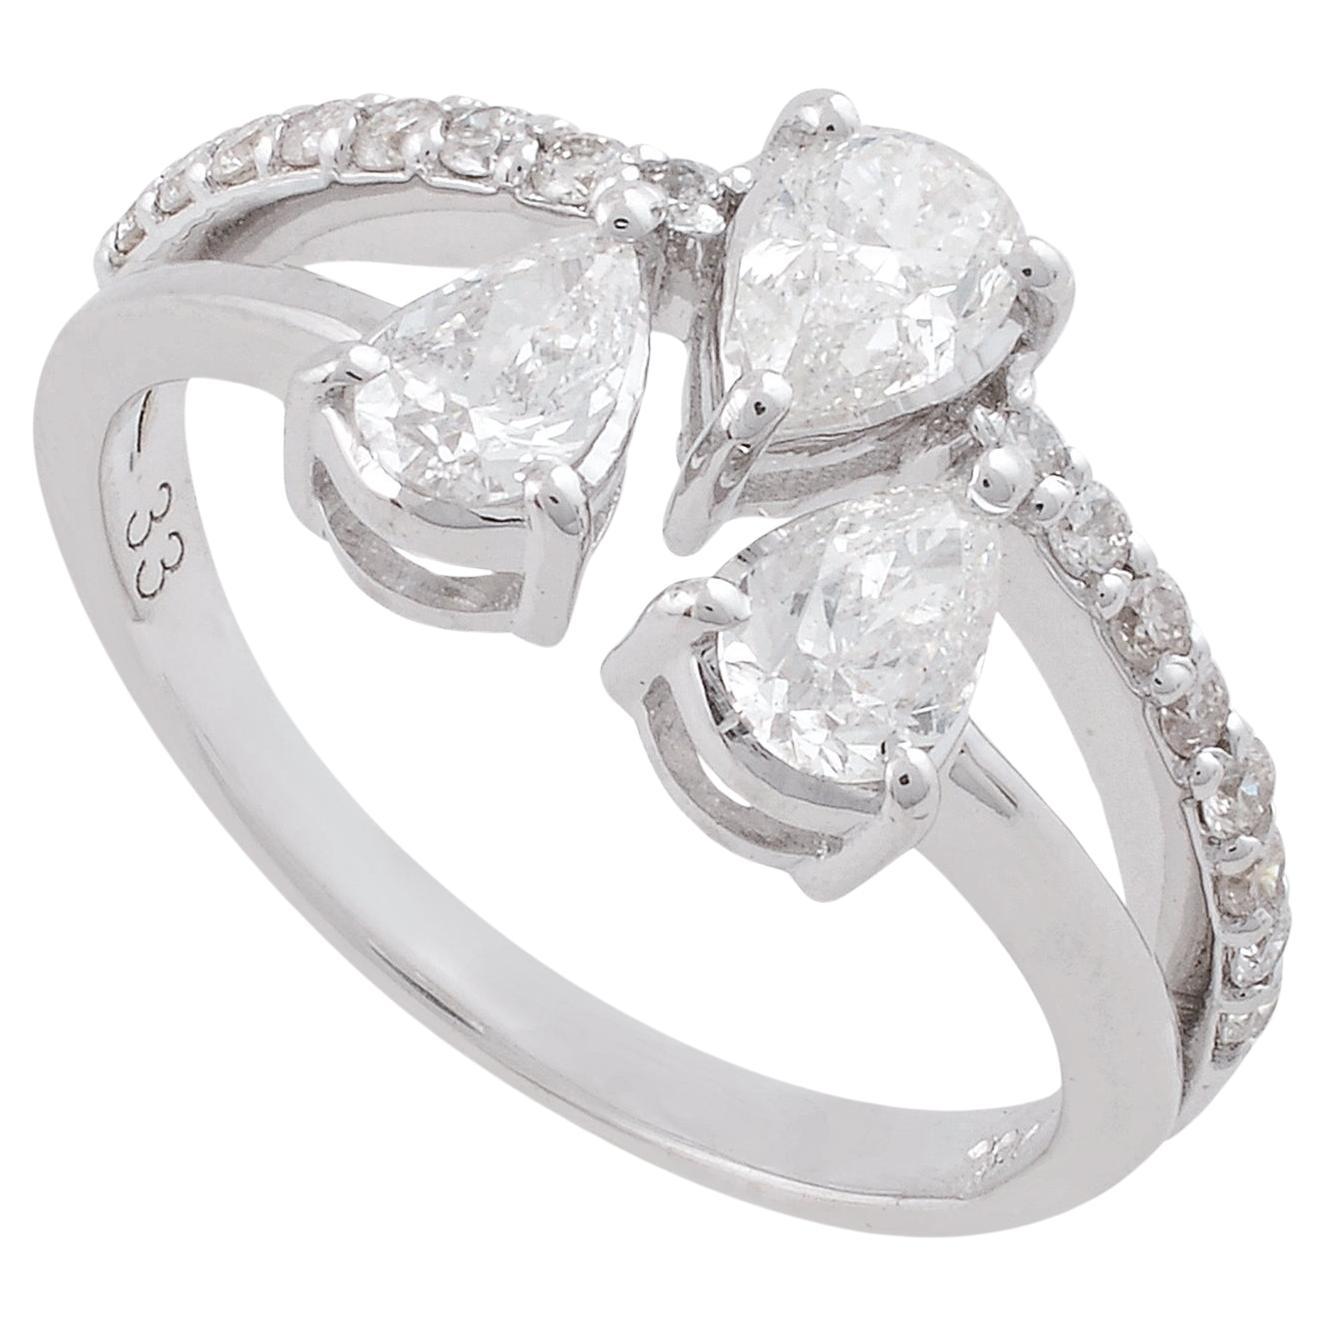 0.99 Carat SI Clarity HI Color Pear Diamond Ring 18k White Gold Handmade Jewelry